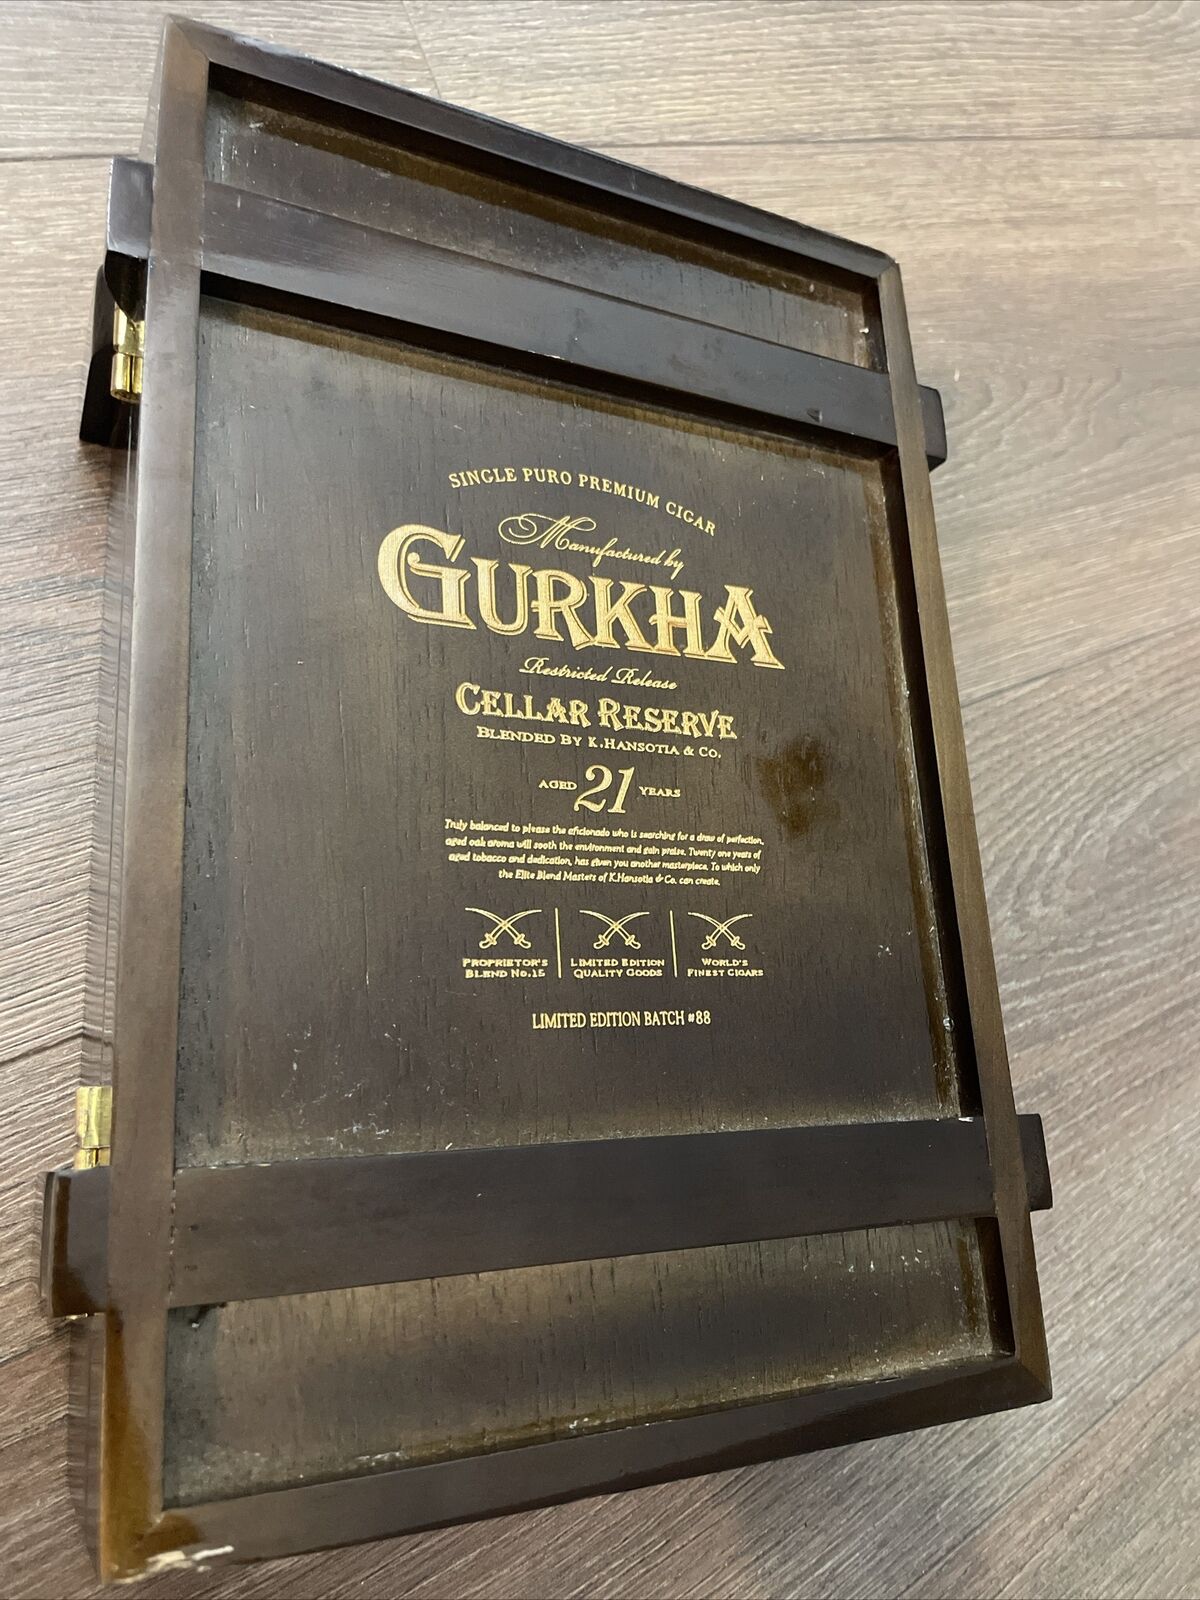 GURKHA Cellar Reserve Ltd Edition Batch #88 Solara DBL Robusto Cigar Box Empty